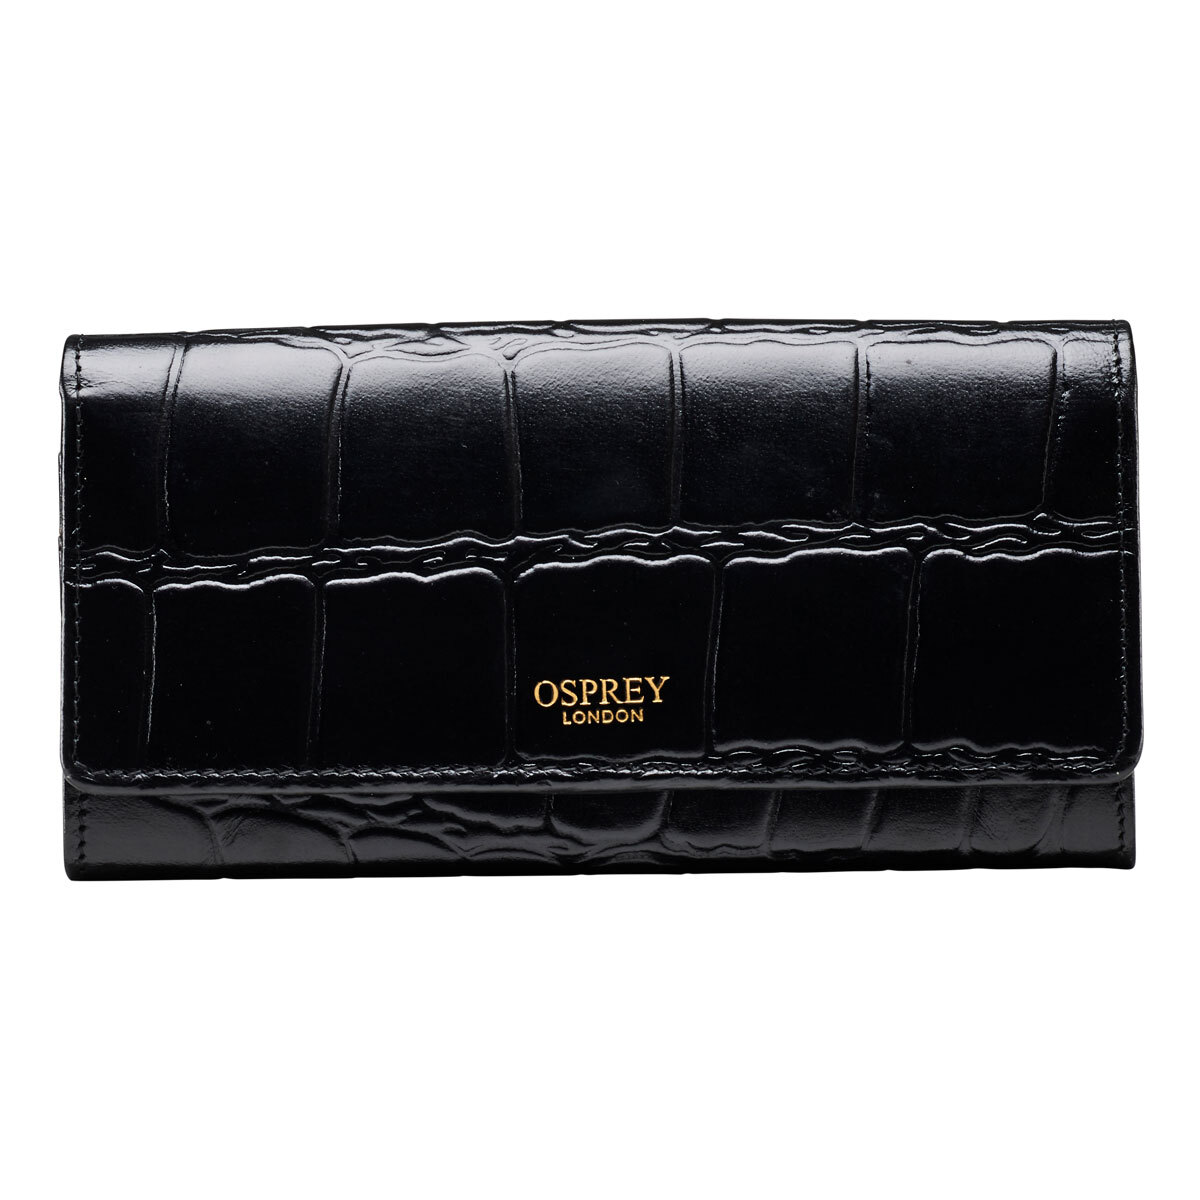 Osprey London Julia Croc Leather Women's Purse, Black with Gift Box